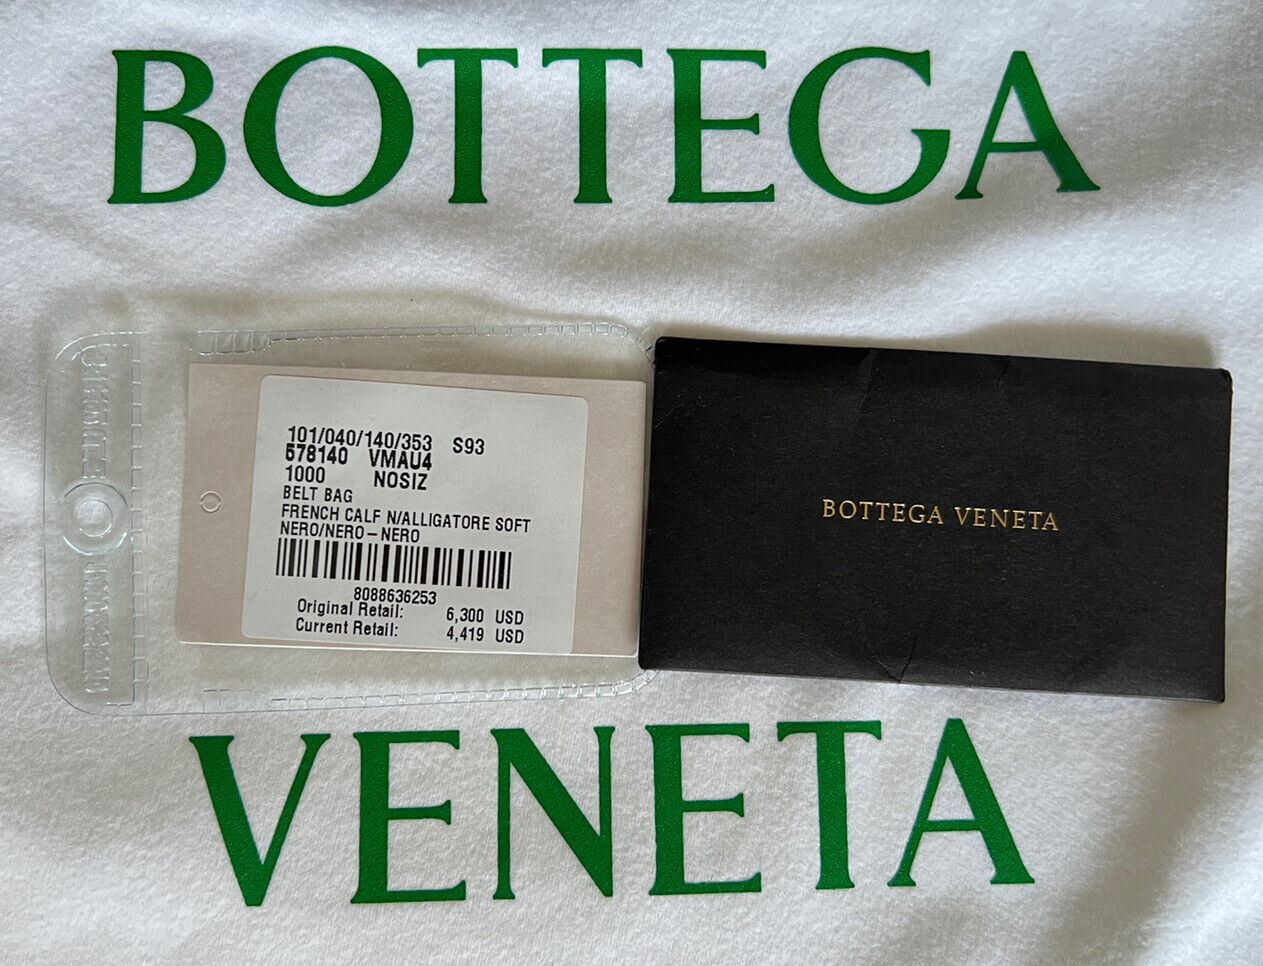 Neu mit Etikett: 6.300 $ Bottega Veneta Alligatorleder Schwarz Gürtel/Taille/Body Bag 578140 